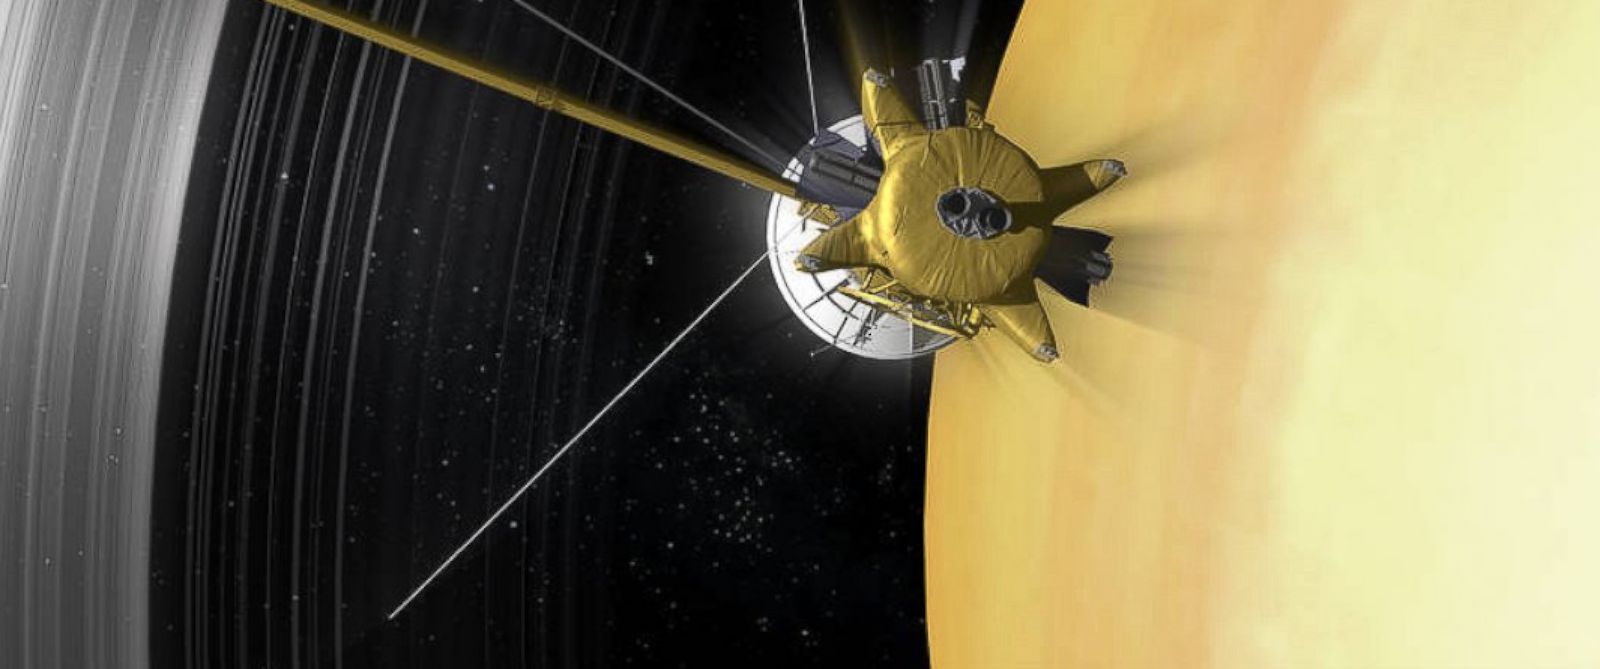 NASA’s Cassini begins ‘ring grazing’ mission at Saturn